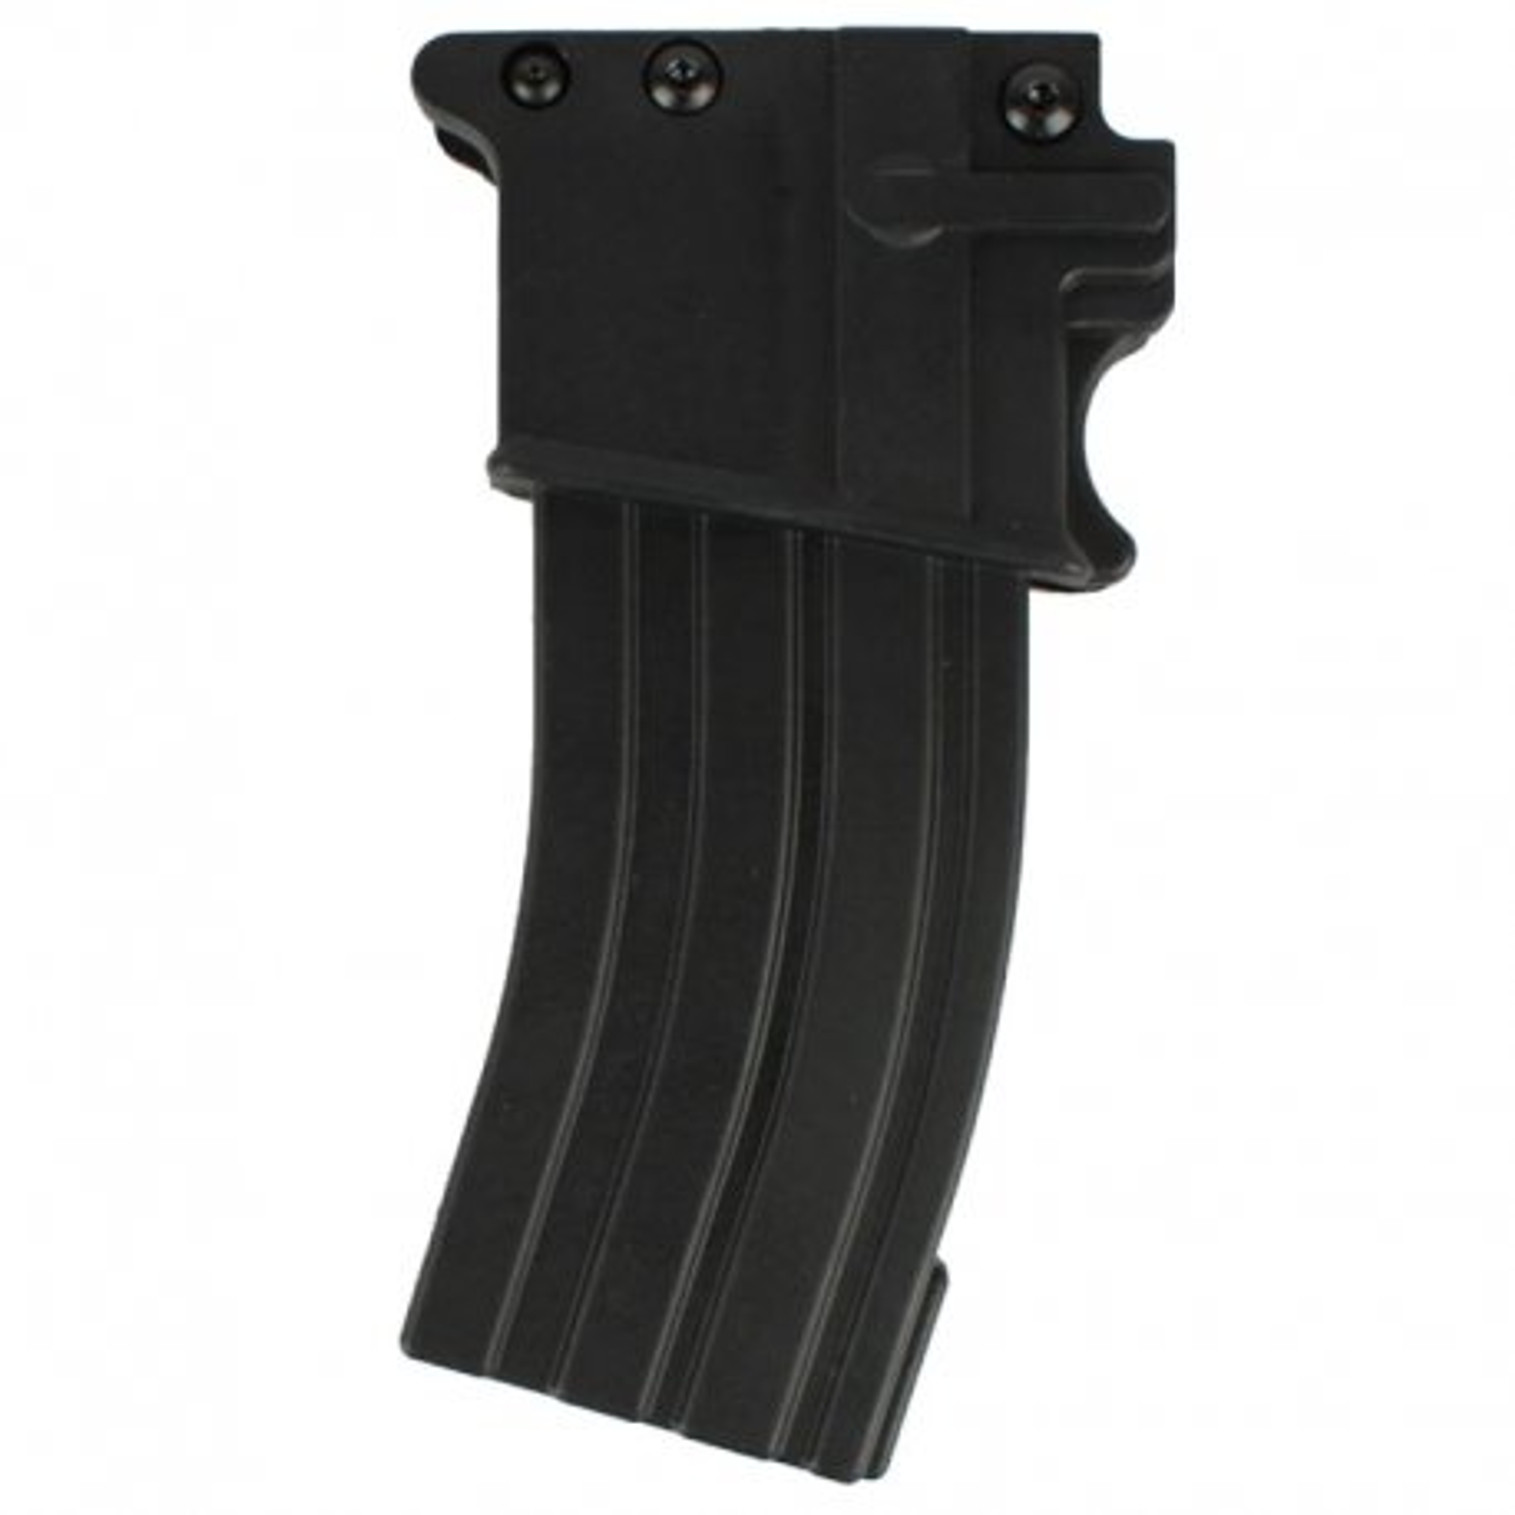 New A5 M4 Mag Kit Black